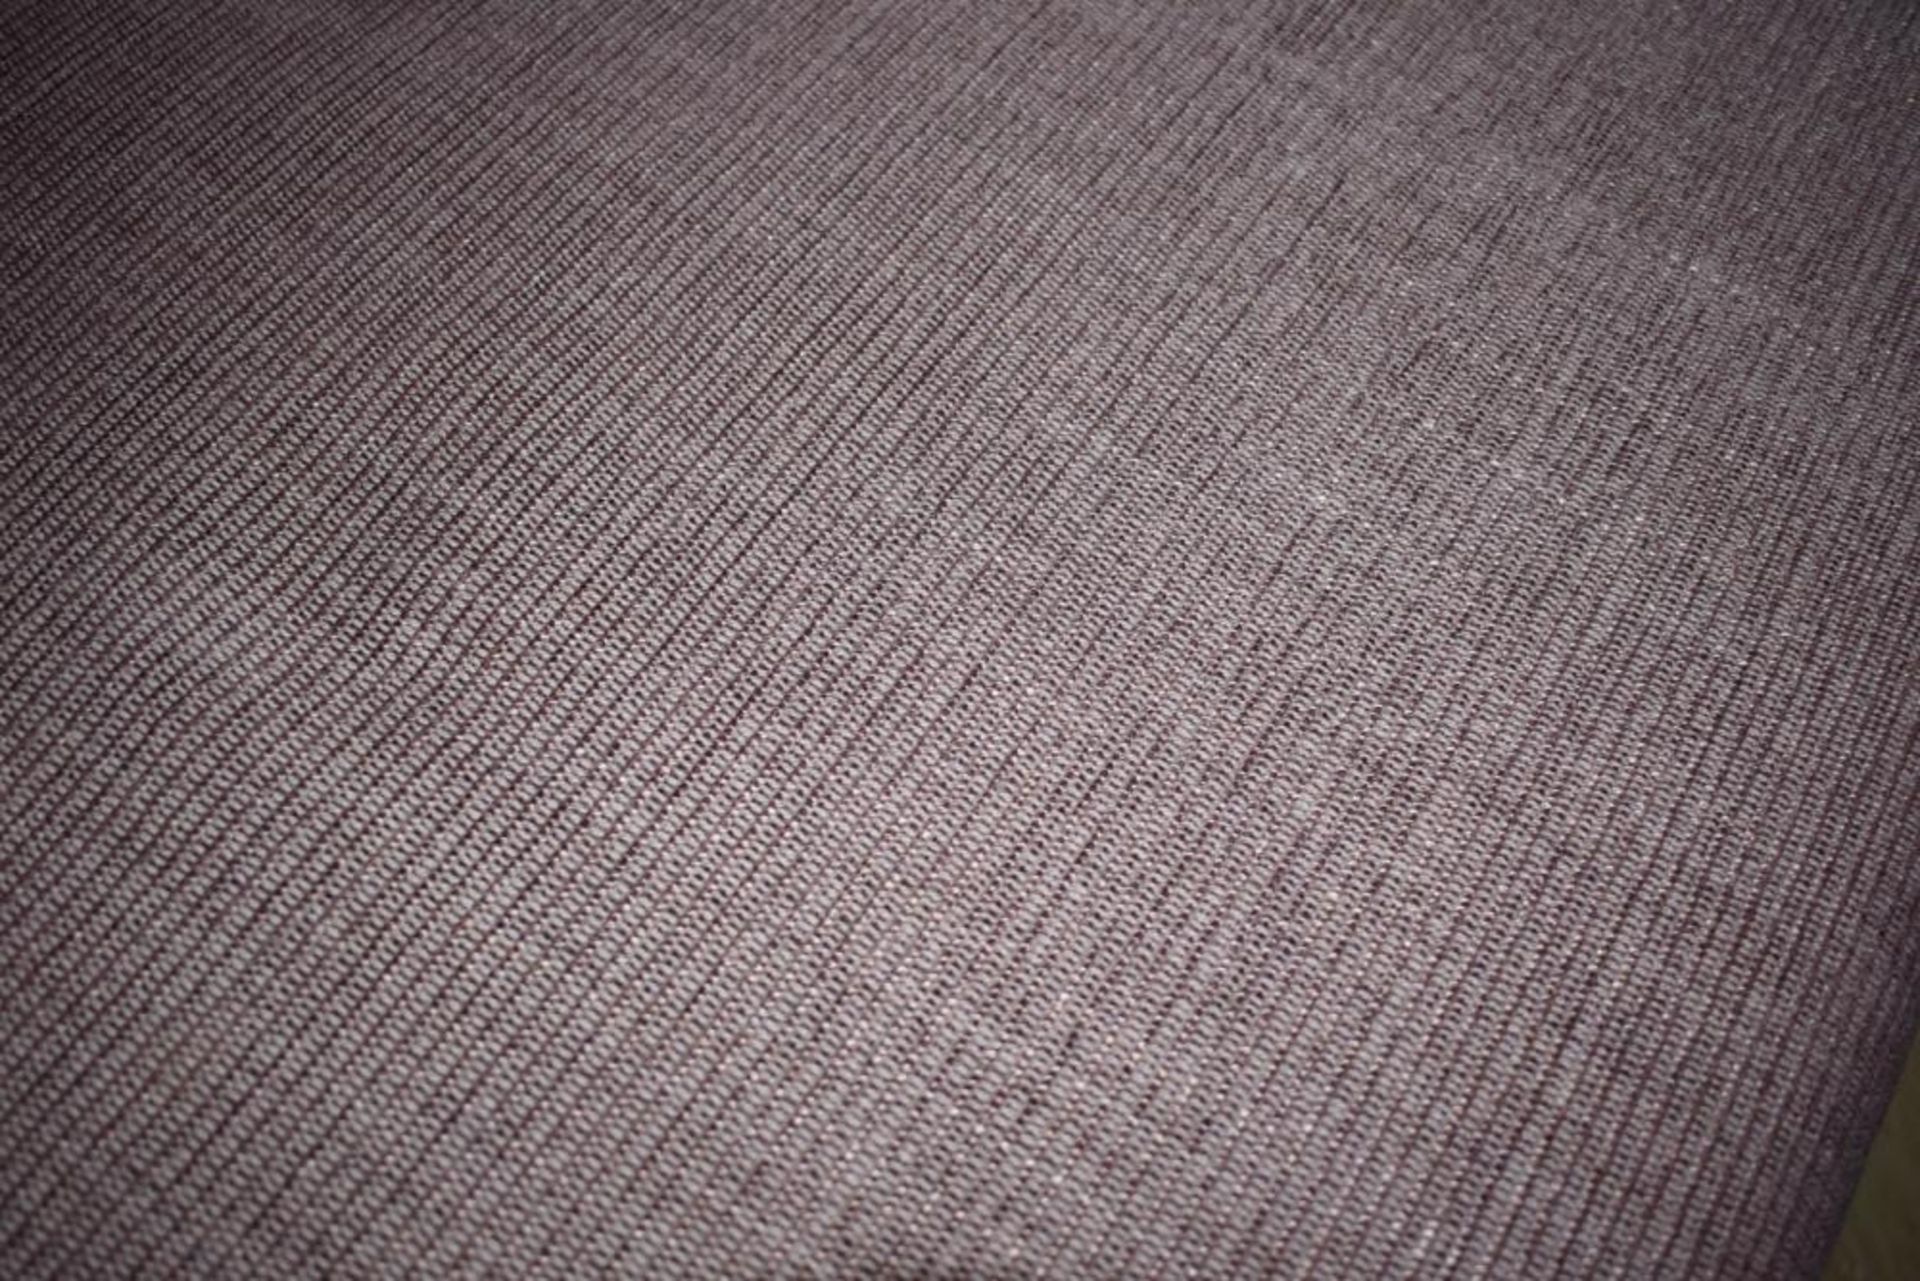 1 x SWAN Italia Corner Sofa and Ottoman finished in Light Purple - CL469 - Location: Prestwich M25 - - Image 8 of 14